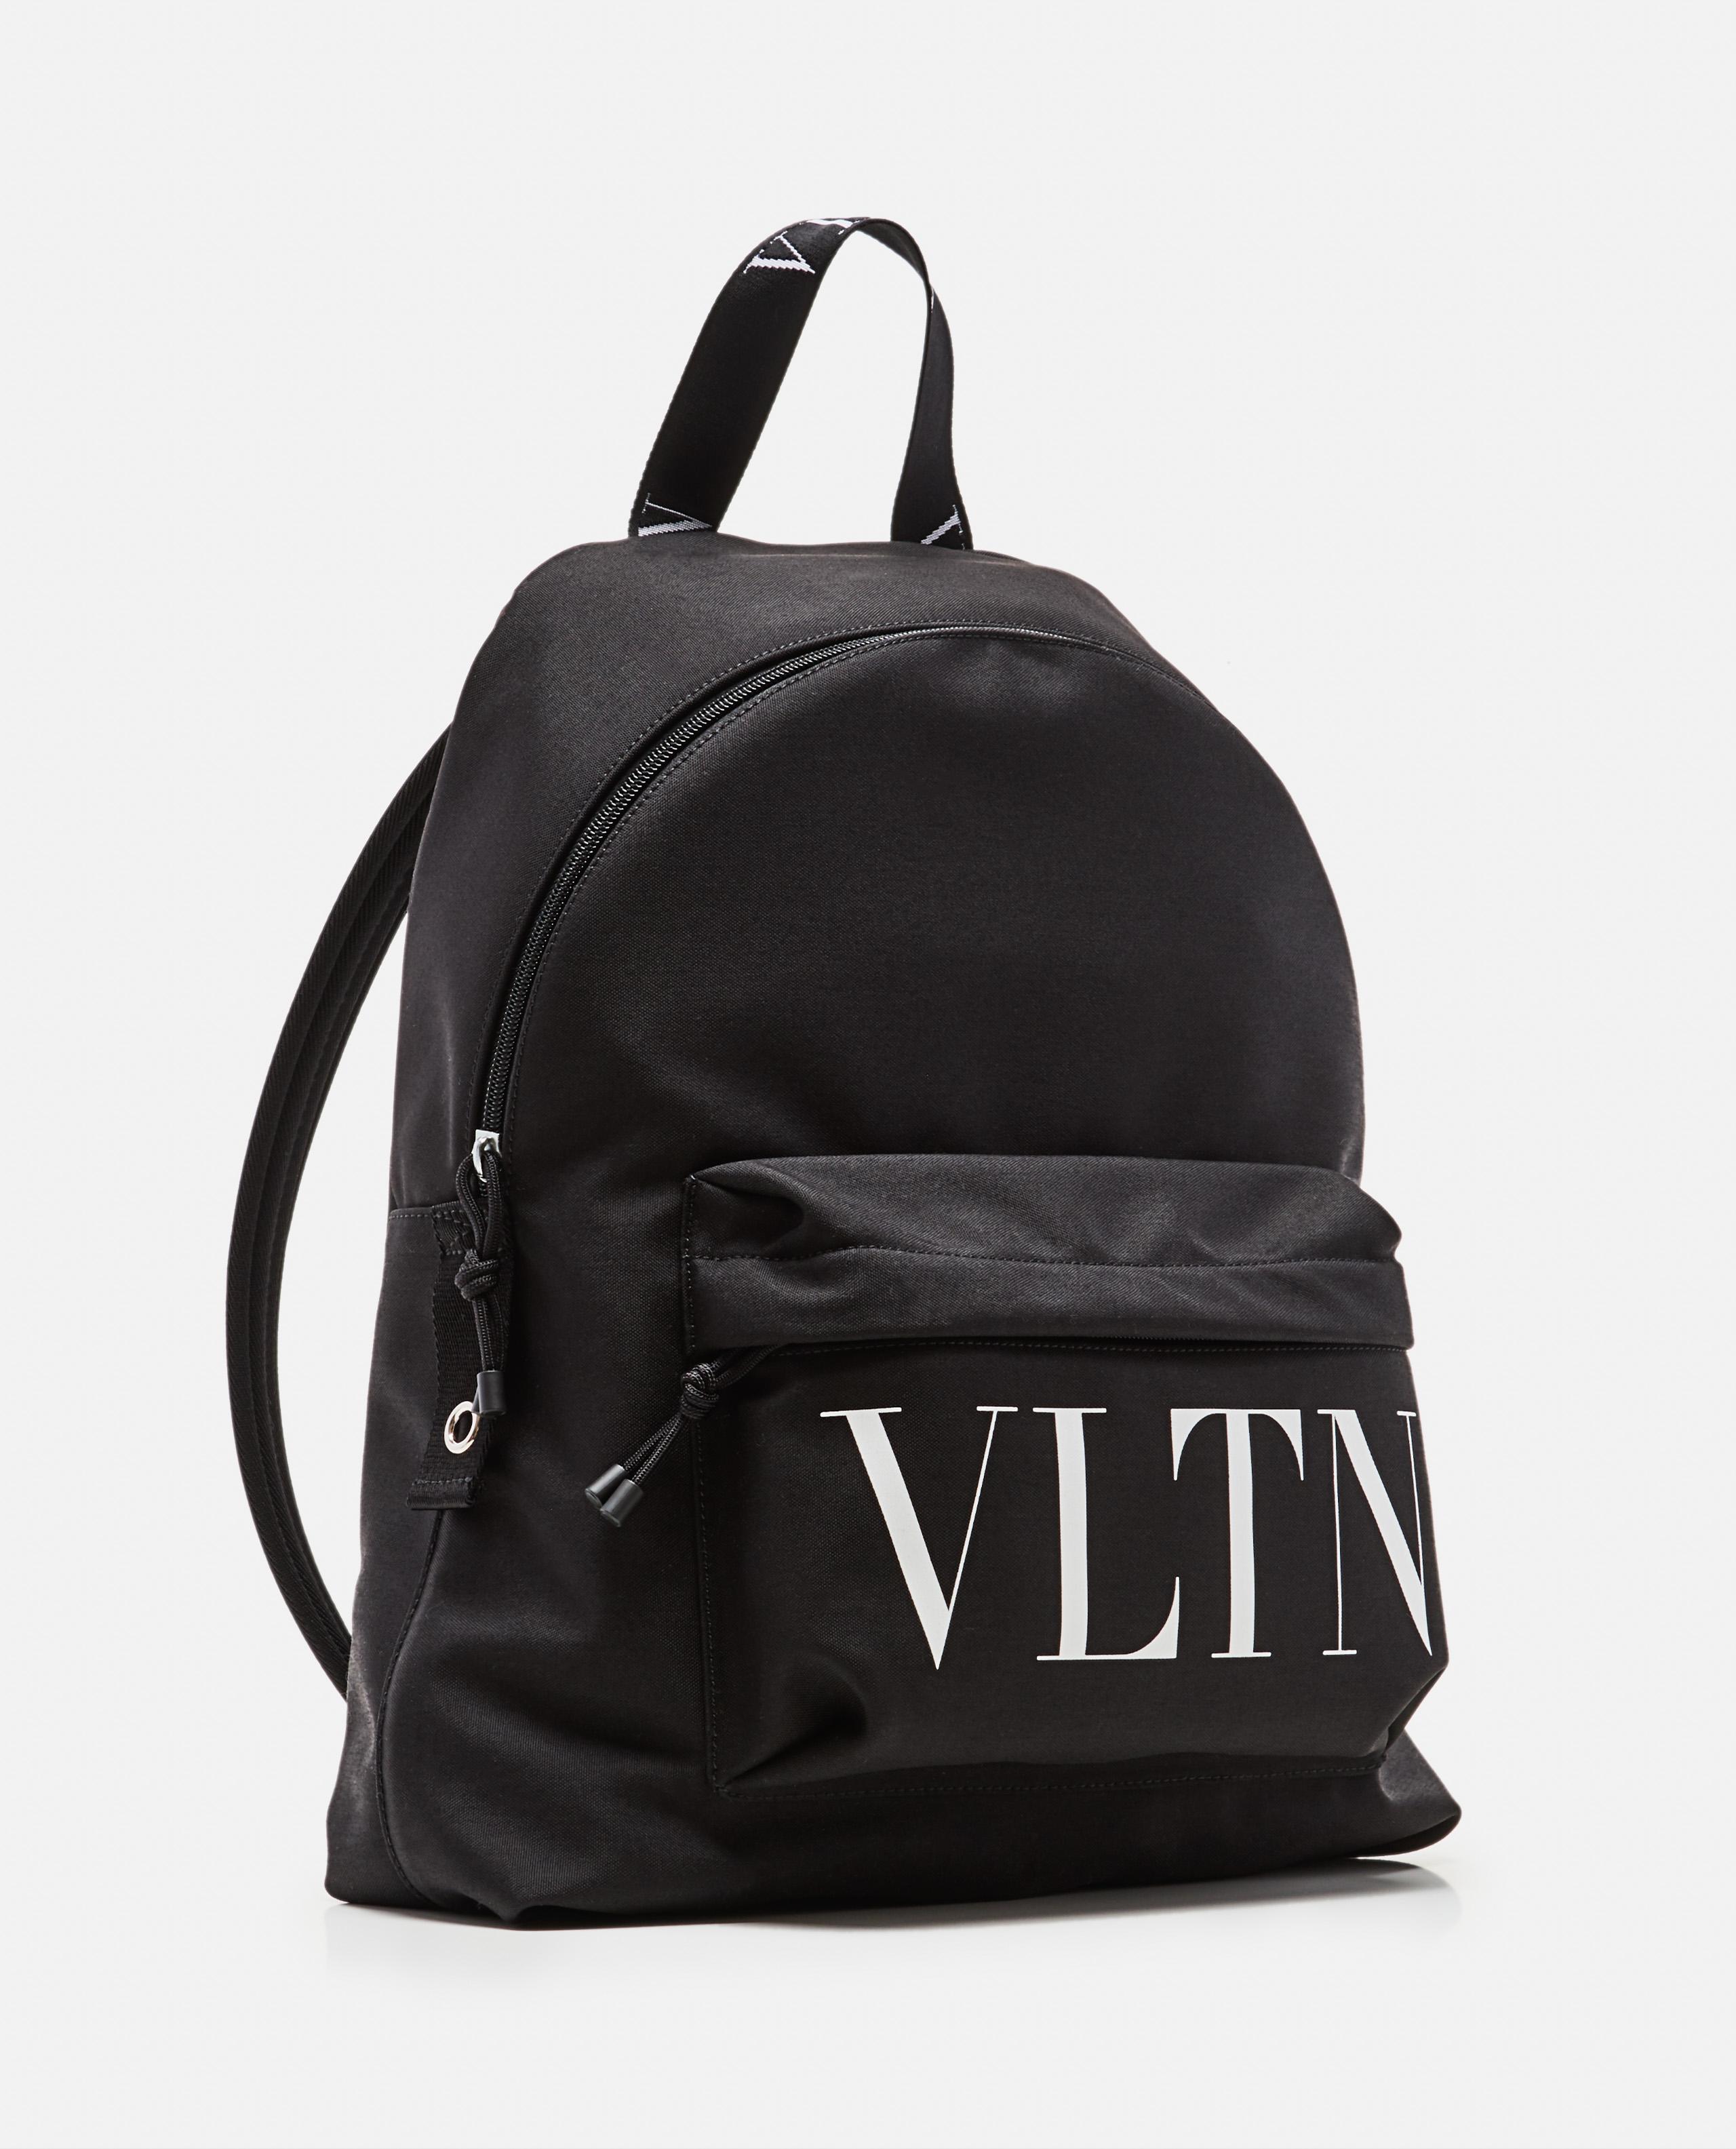 Valentino Synthetic 'vltn' Backpack in Black for Men - Lyst